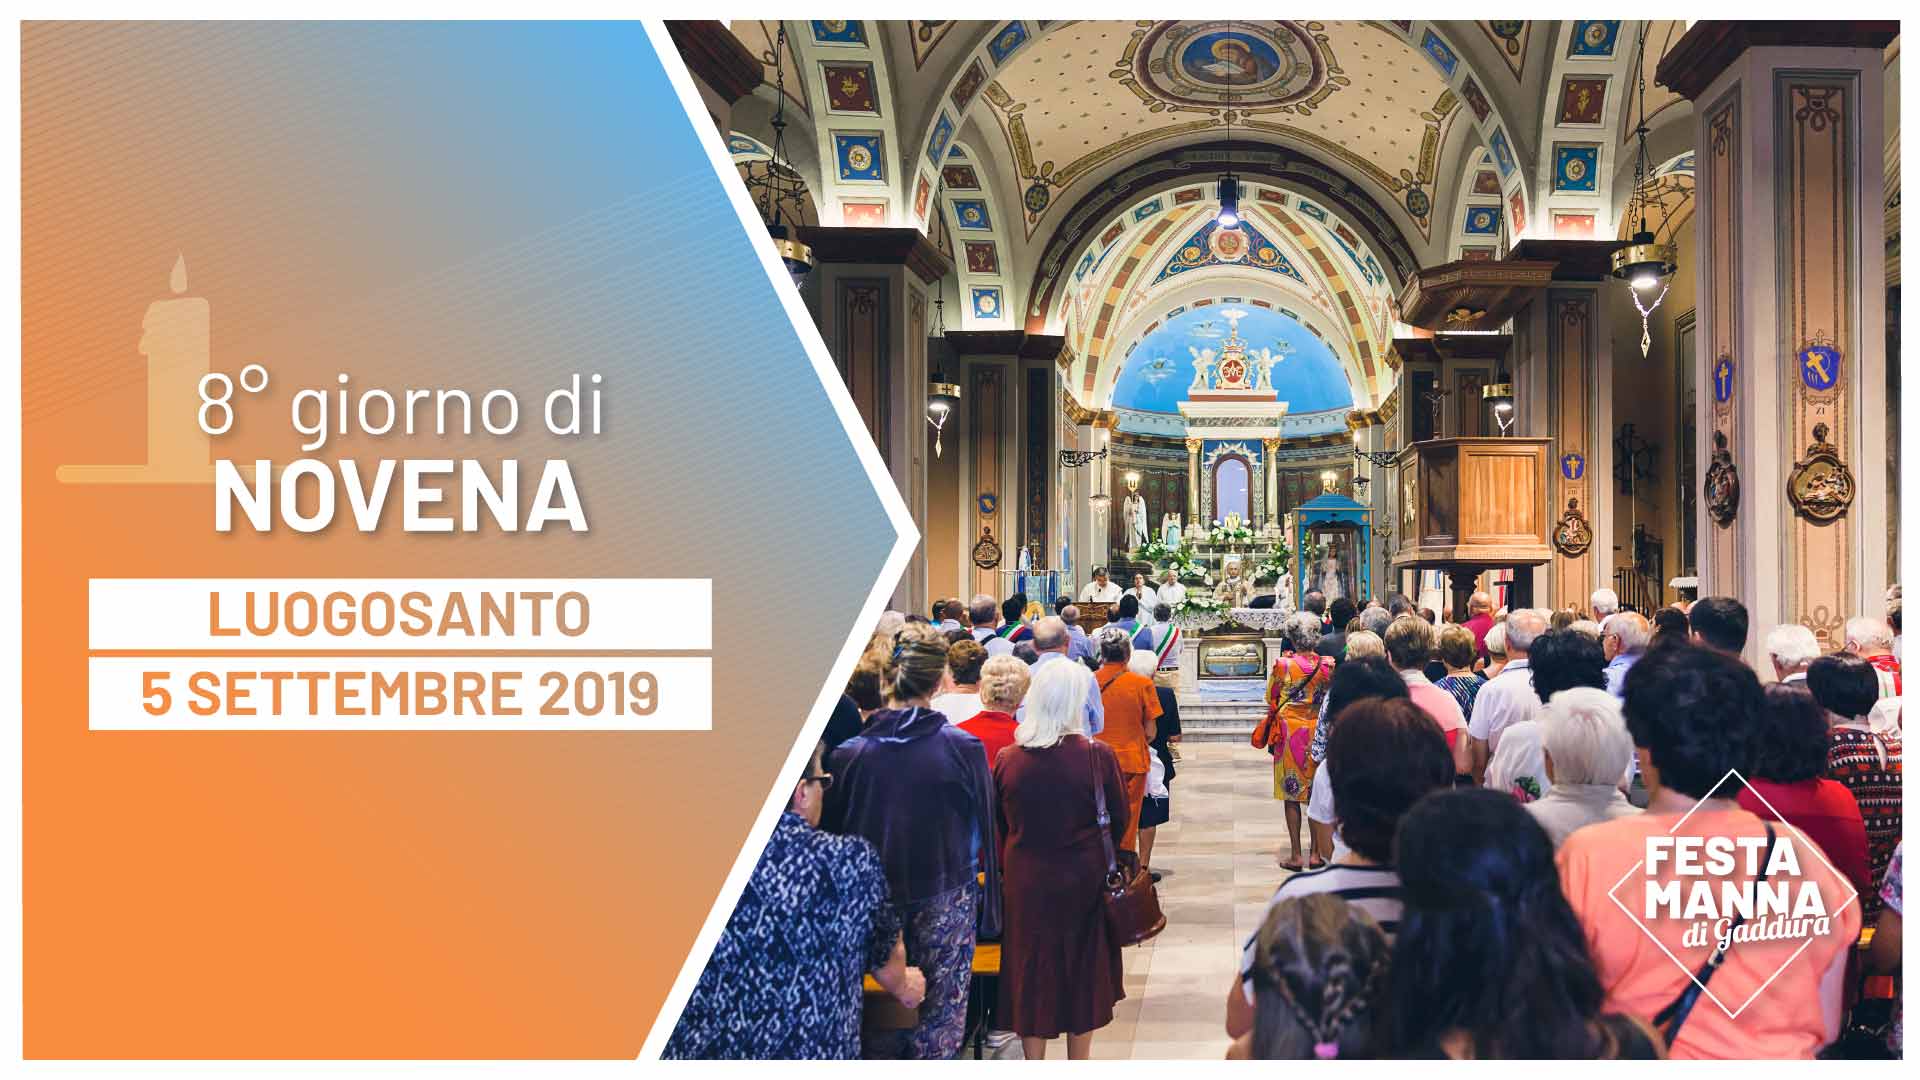 Eighth day of the novena | Festa Manna di Gaddura 2019